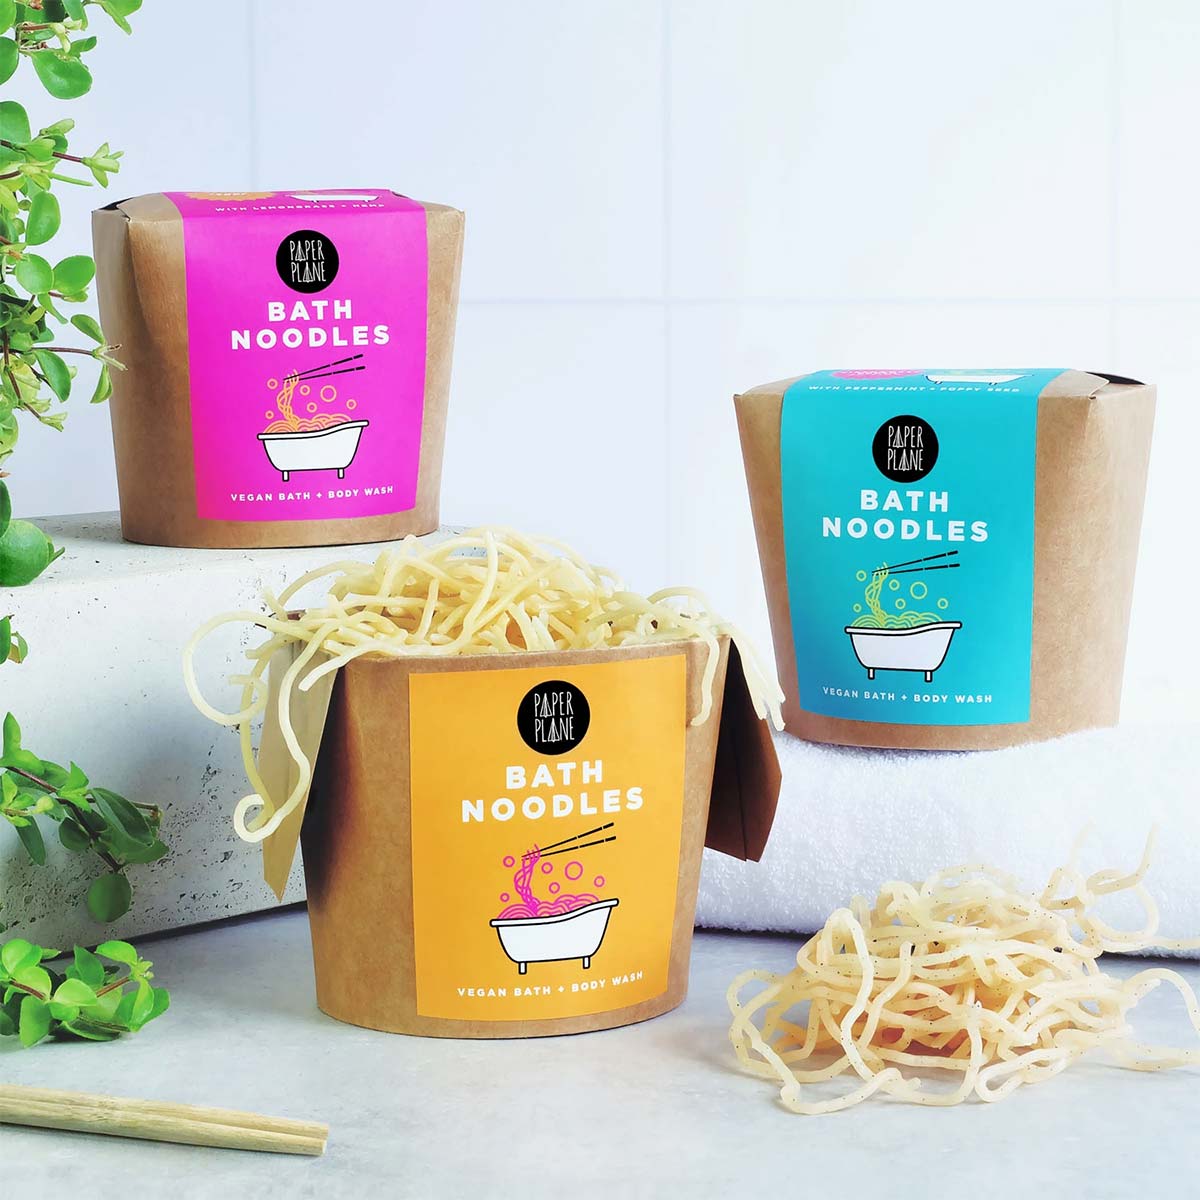 Bath Noodles - Singapore Spice: Tea tree and Turmeric